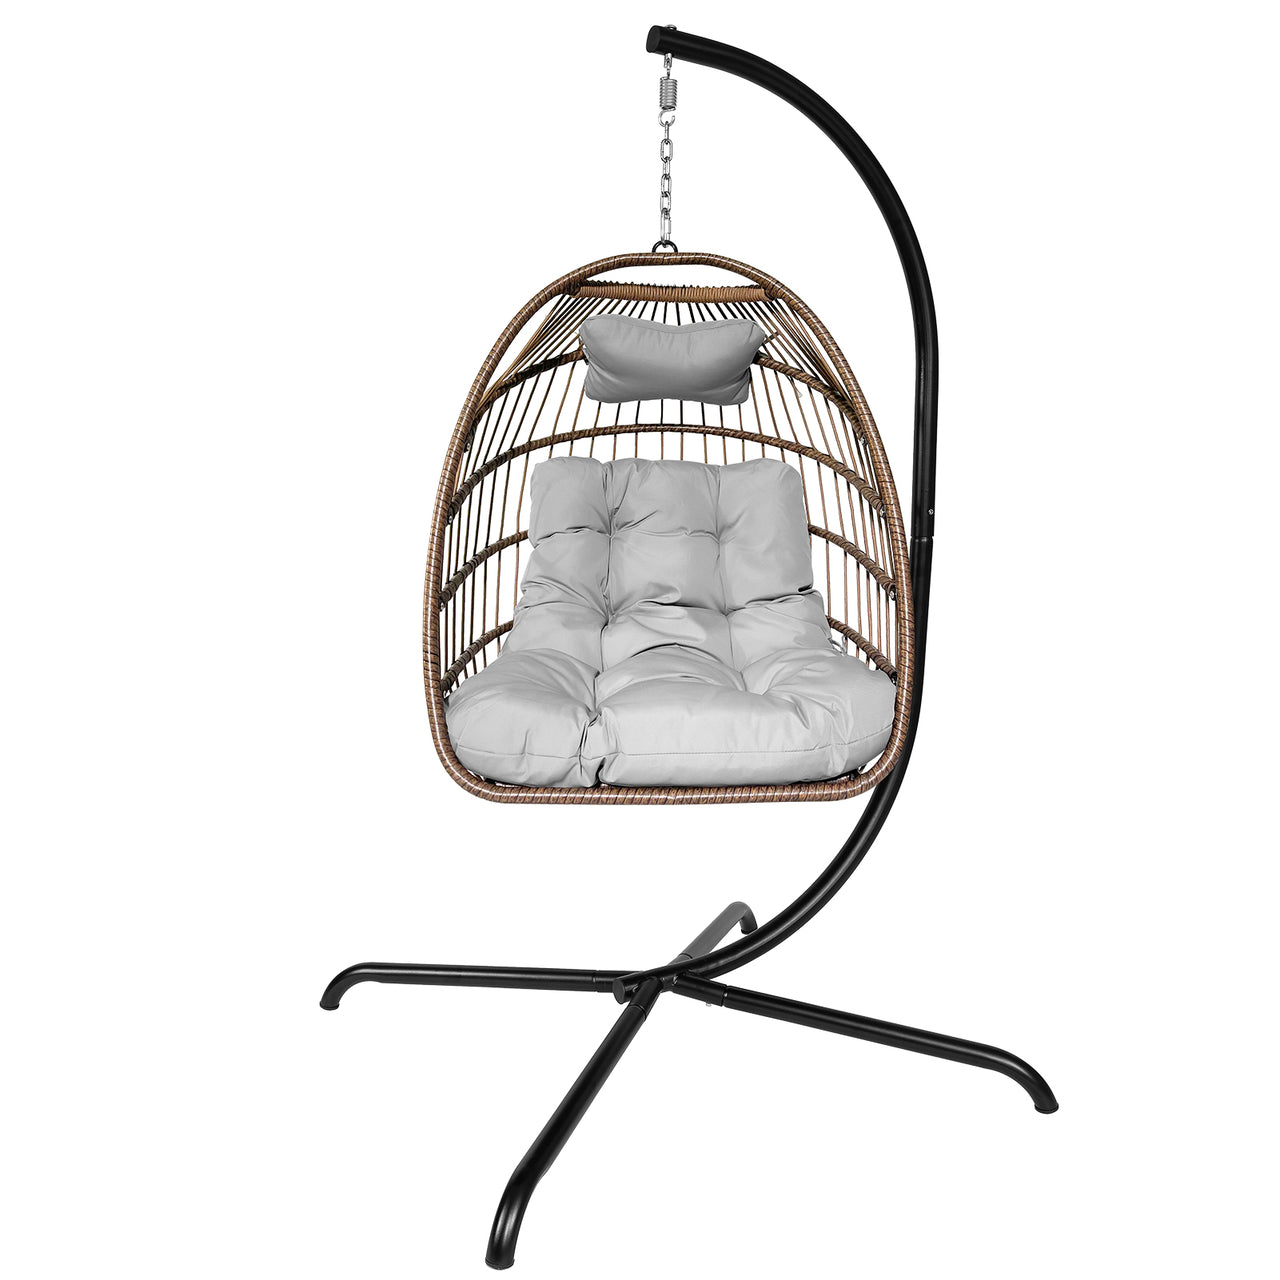 Swing Egg Chair With Stand Indoor Outdoor Wicker Rattan Patio Basket